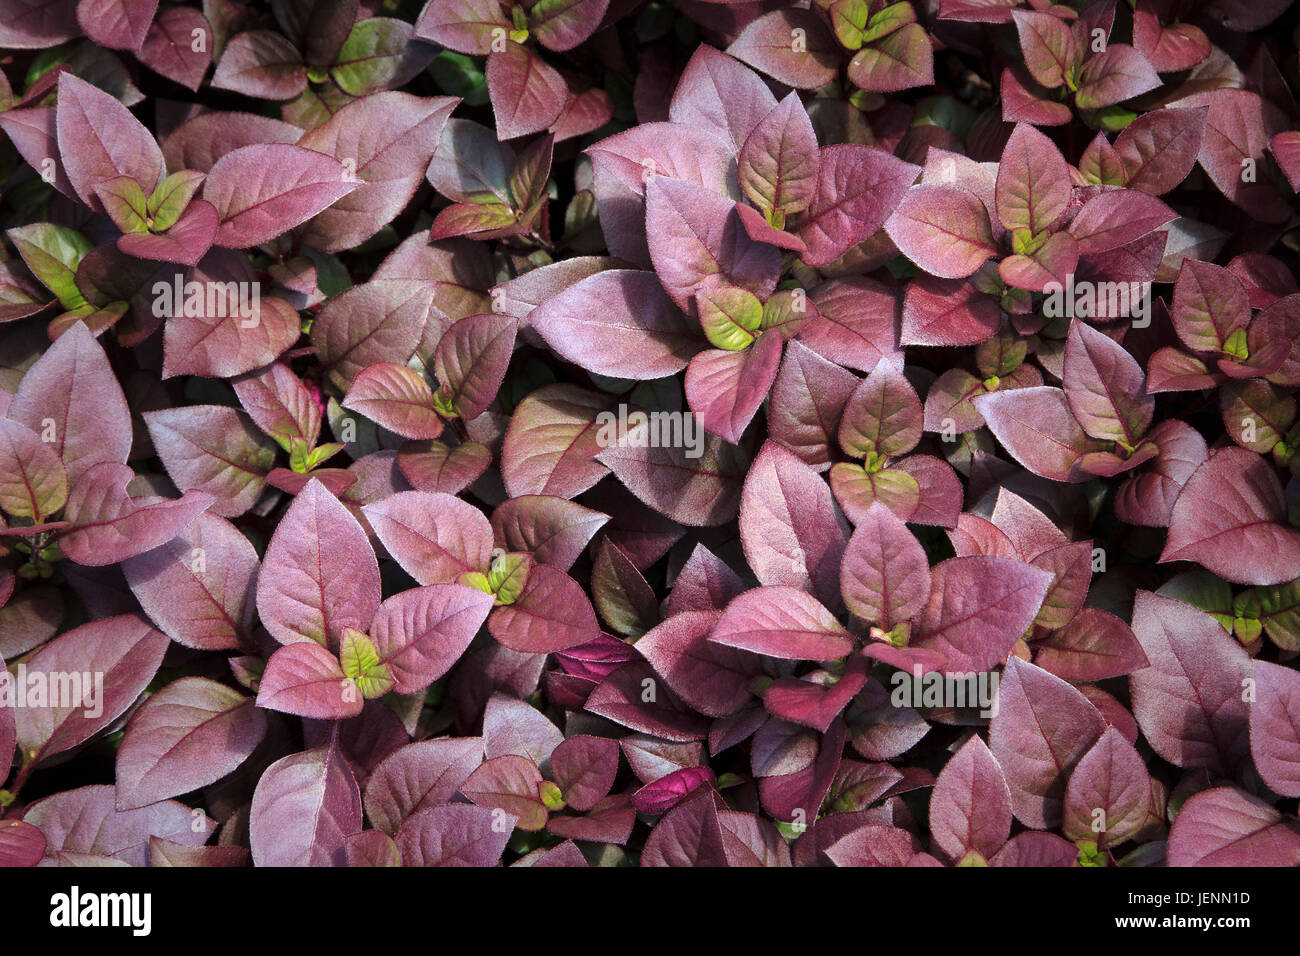 Altemanthera Josephs coat decorative plant Stock Photo